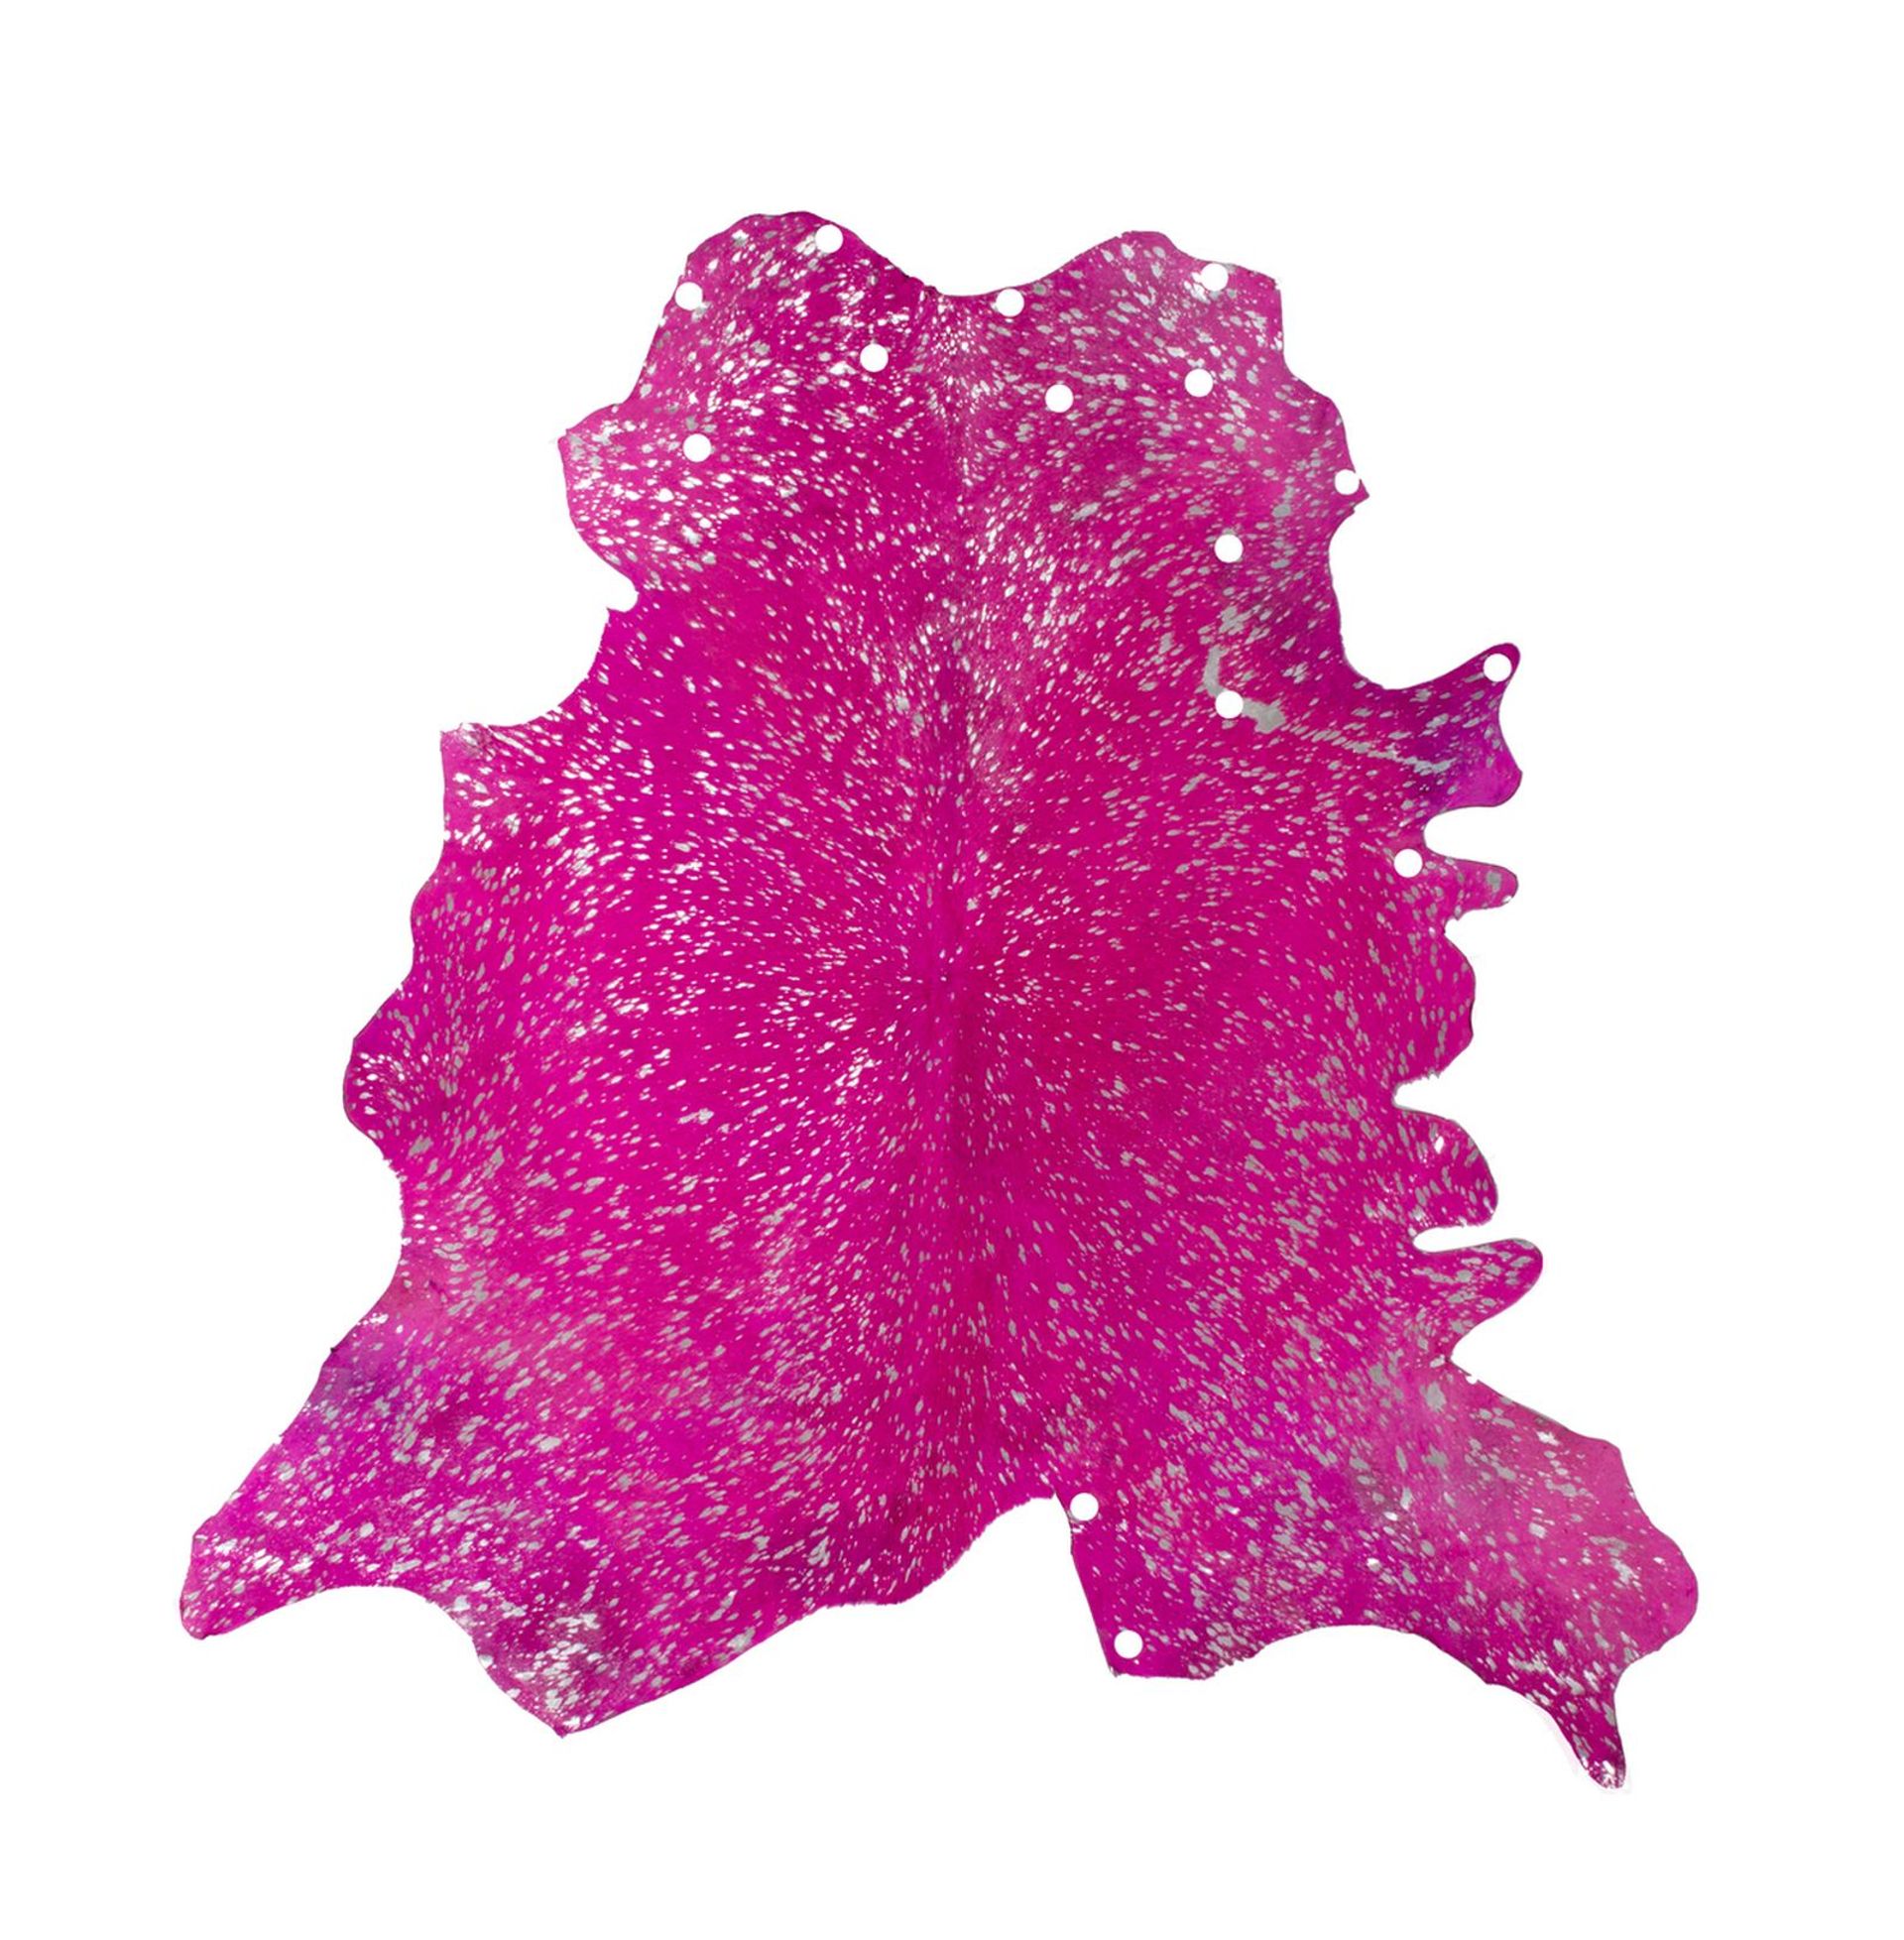 Teppich Glam 410 Violett / Silber 1,35 qm - 1,65 qm